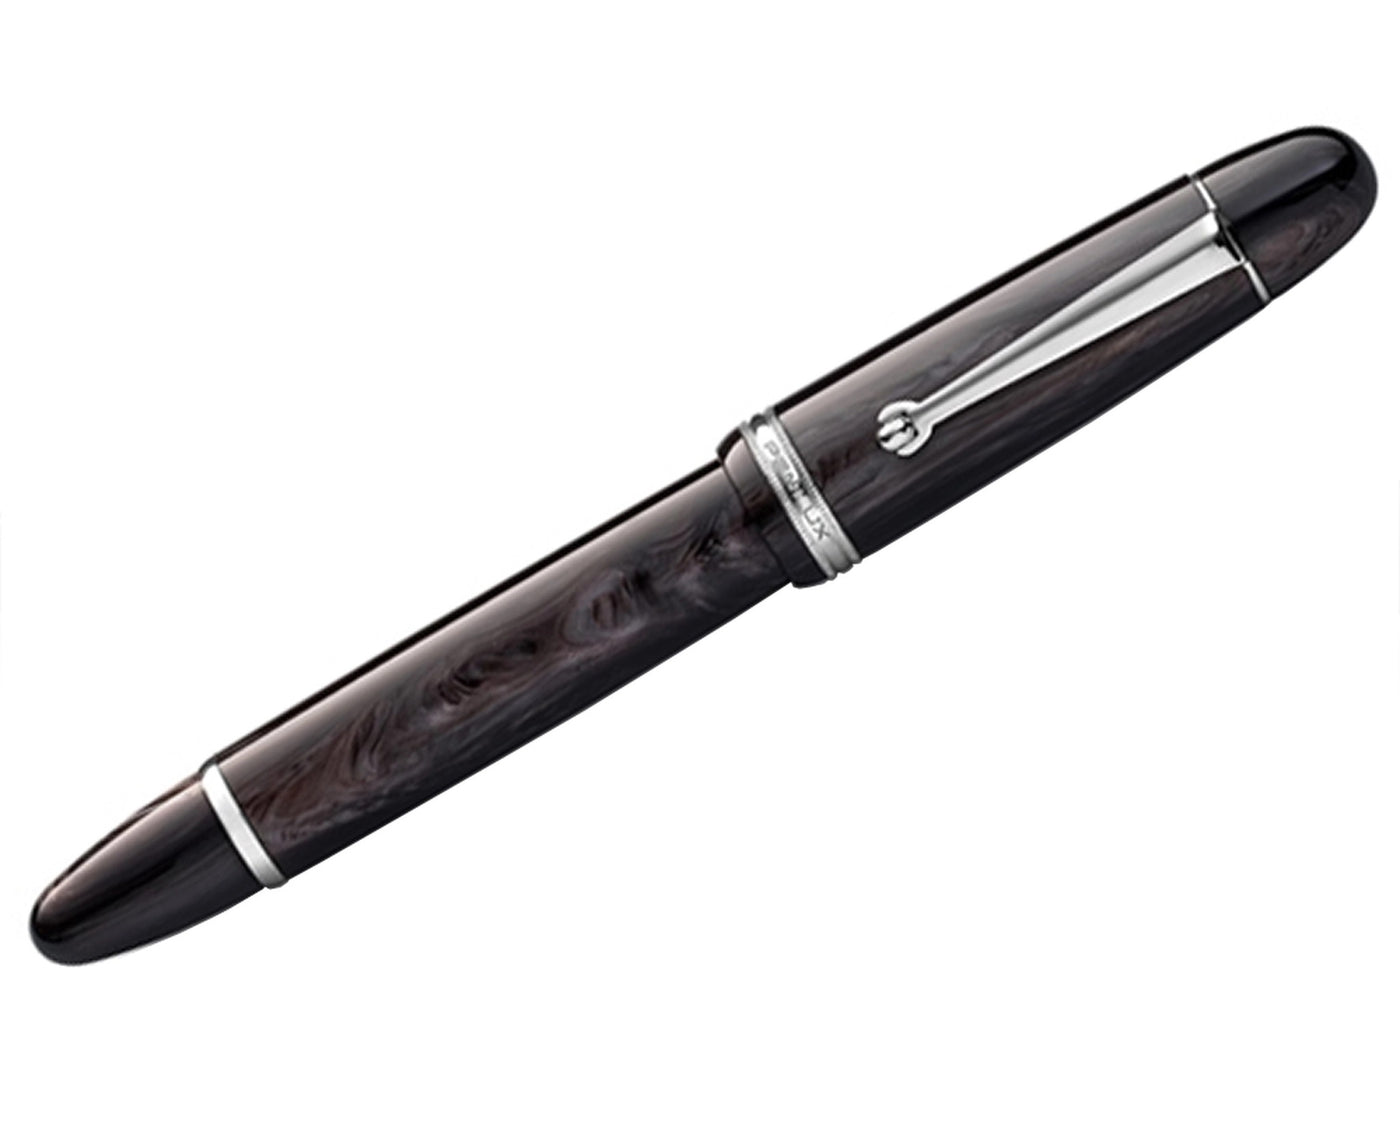 Penlux Masterpiece Grande Fountain Ink Pen| Black Wave Body | Piston Filling | Oversize Pen with No. 6 Jowo Nibs